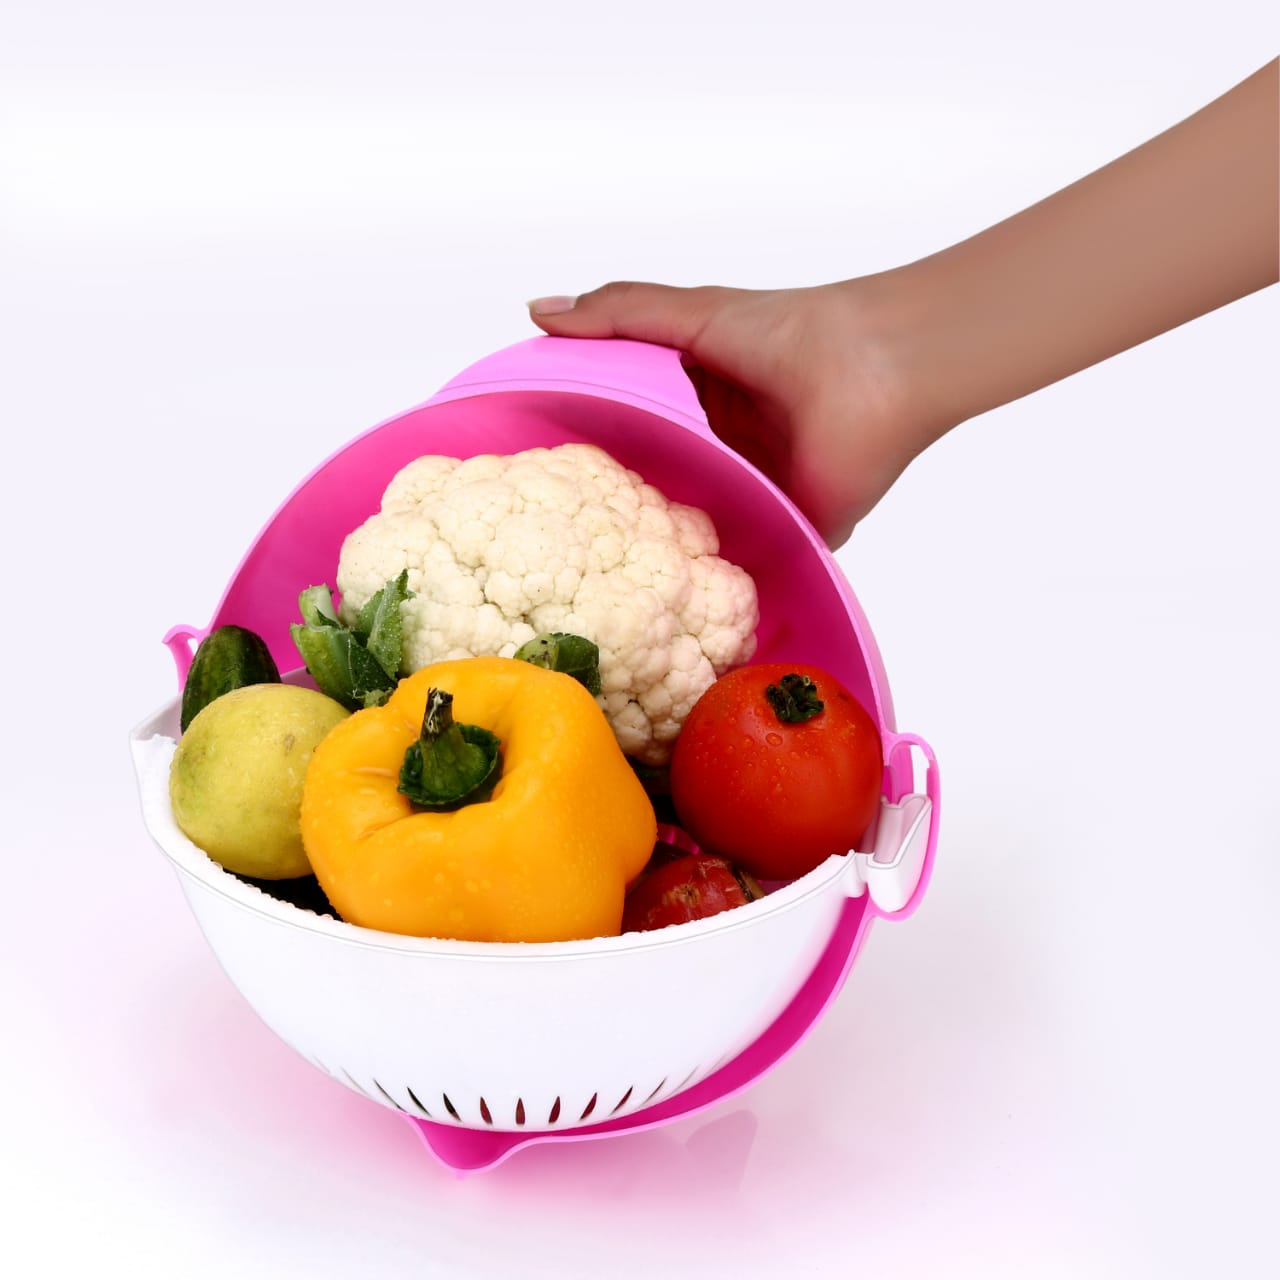 2214 Multifunctional Vegetable Fruits Cutter Shredder with Rotating Drain Basket DeoDap